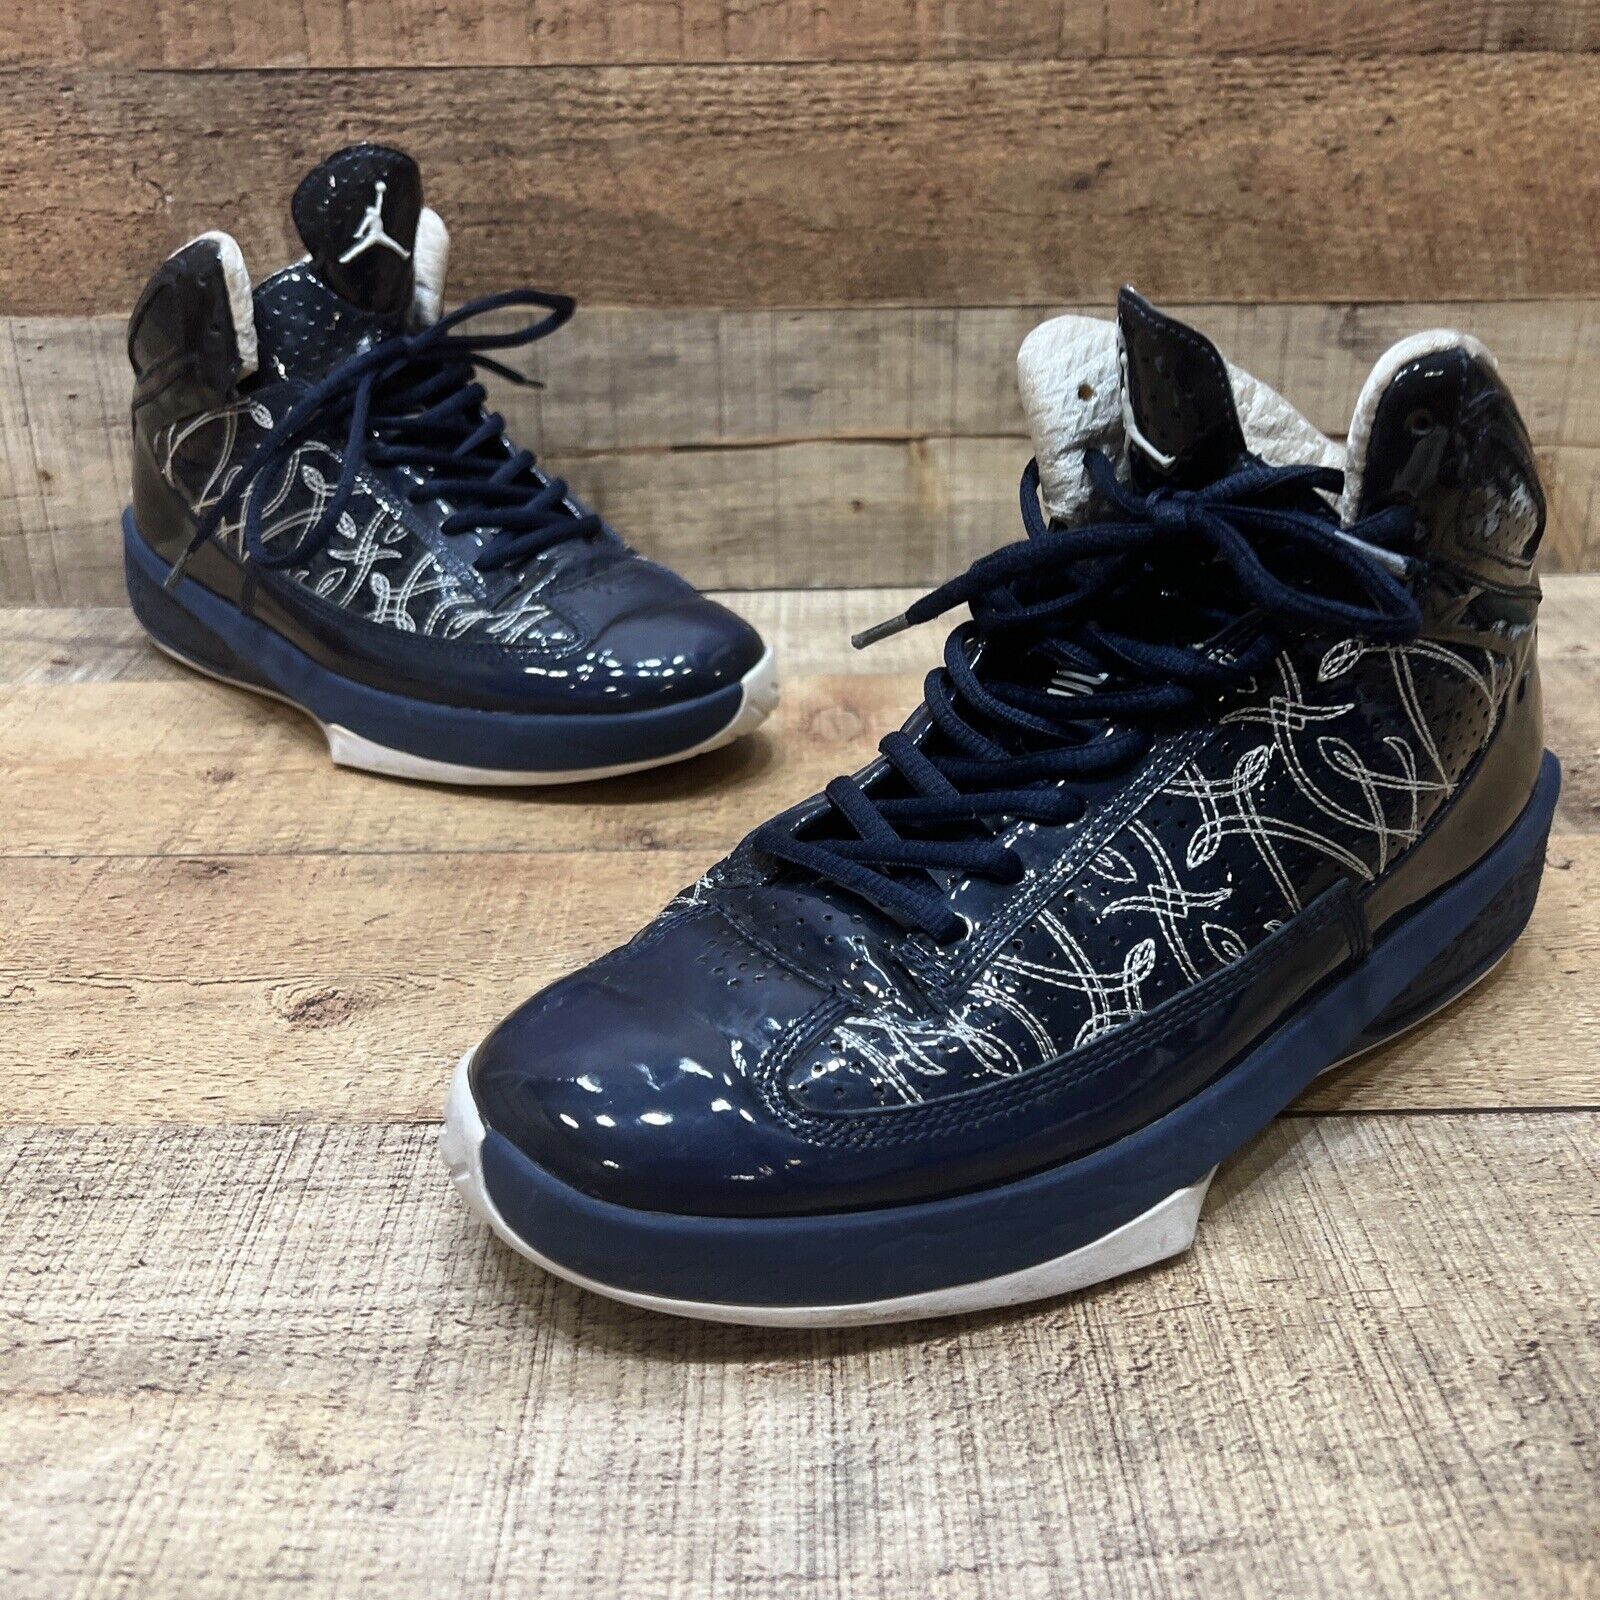 Nike Air Jordan Icons Mens Basketball Shoes Navy patent Gerald Wallace Size 8.5